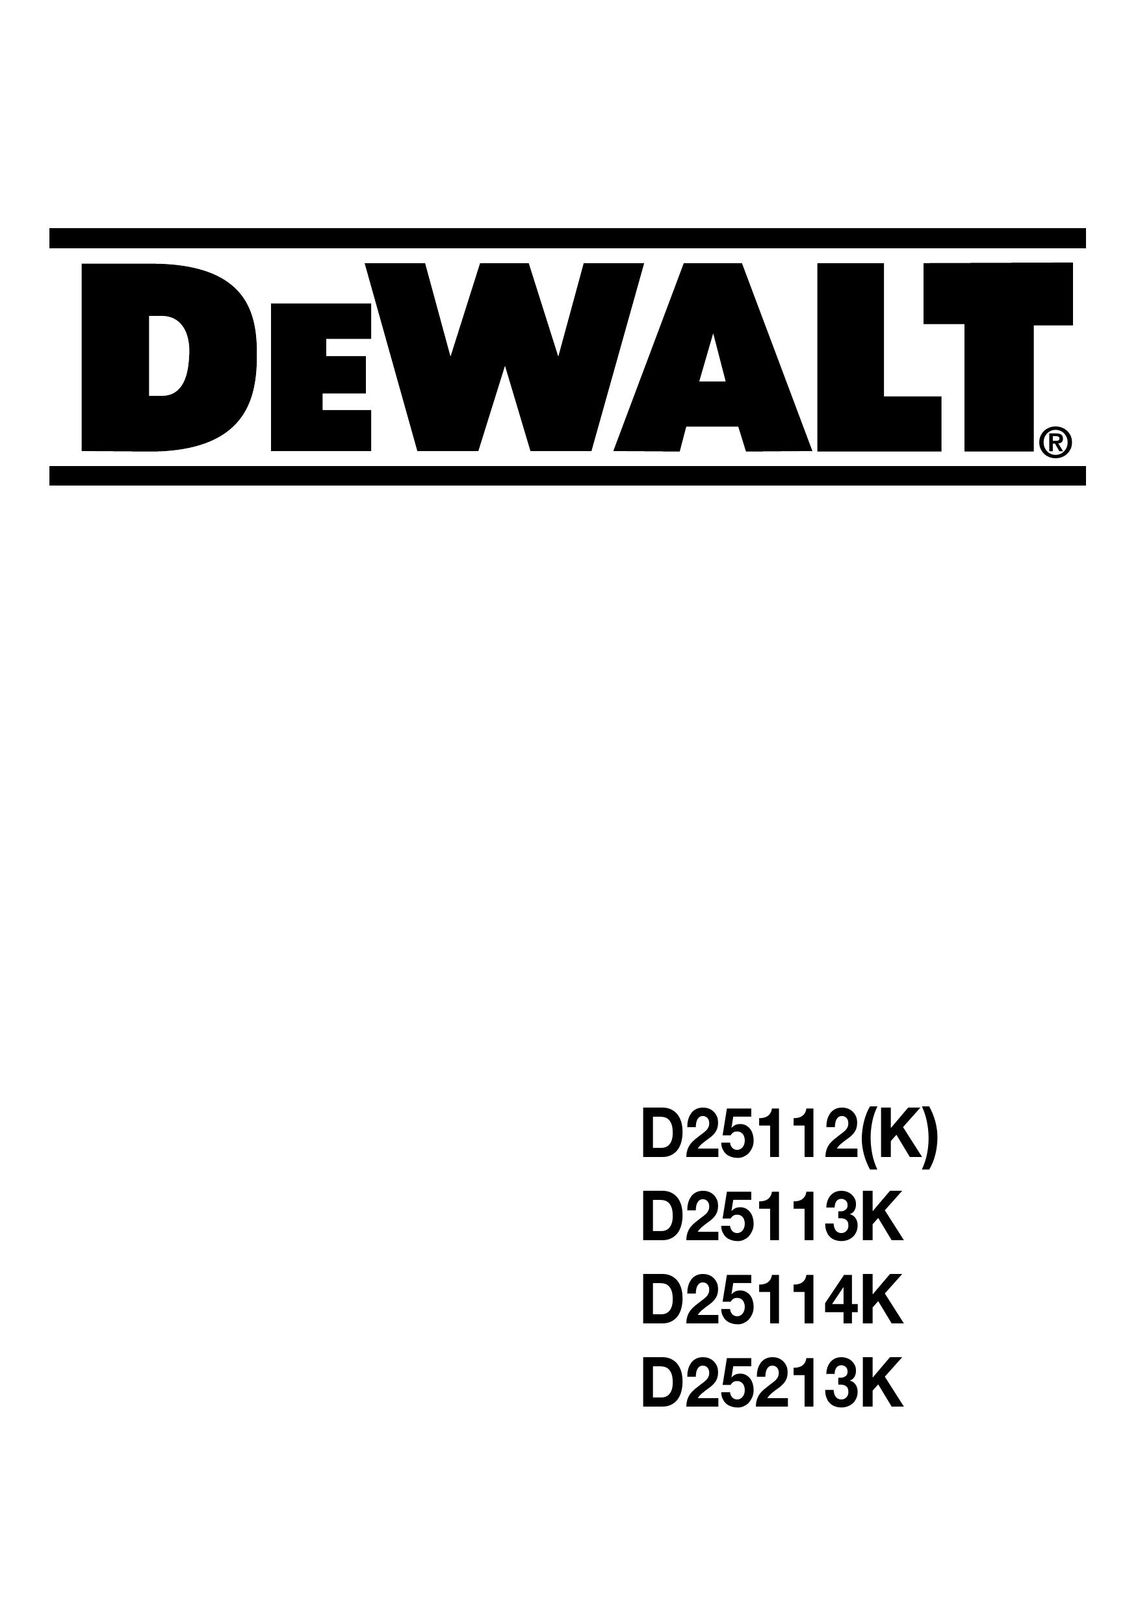 DeWalt D25213K Cordless Drill User Manual